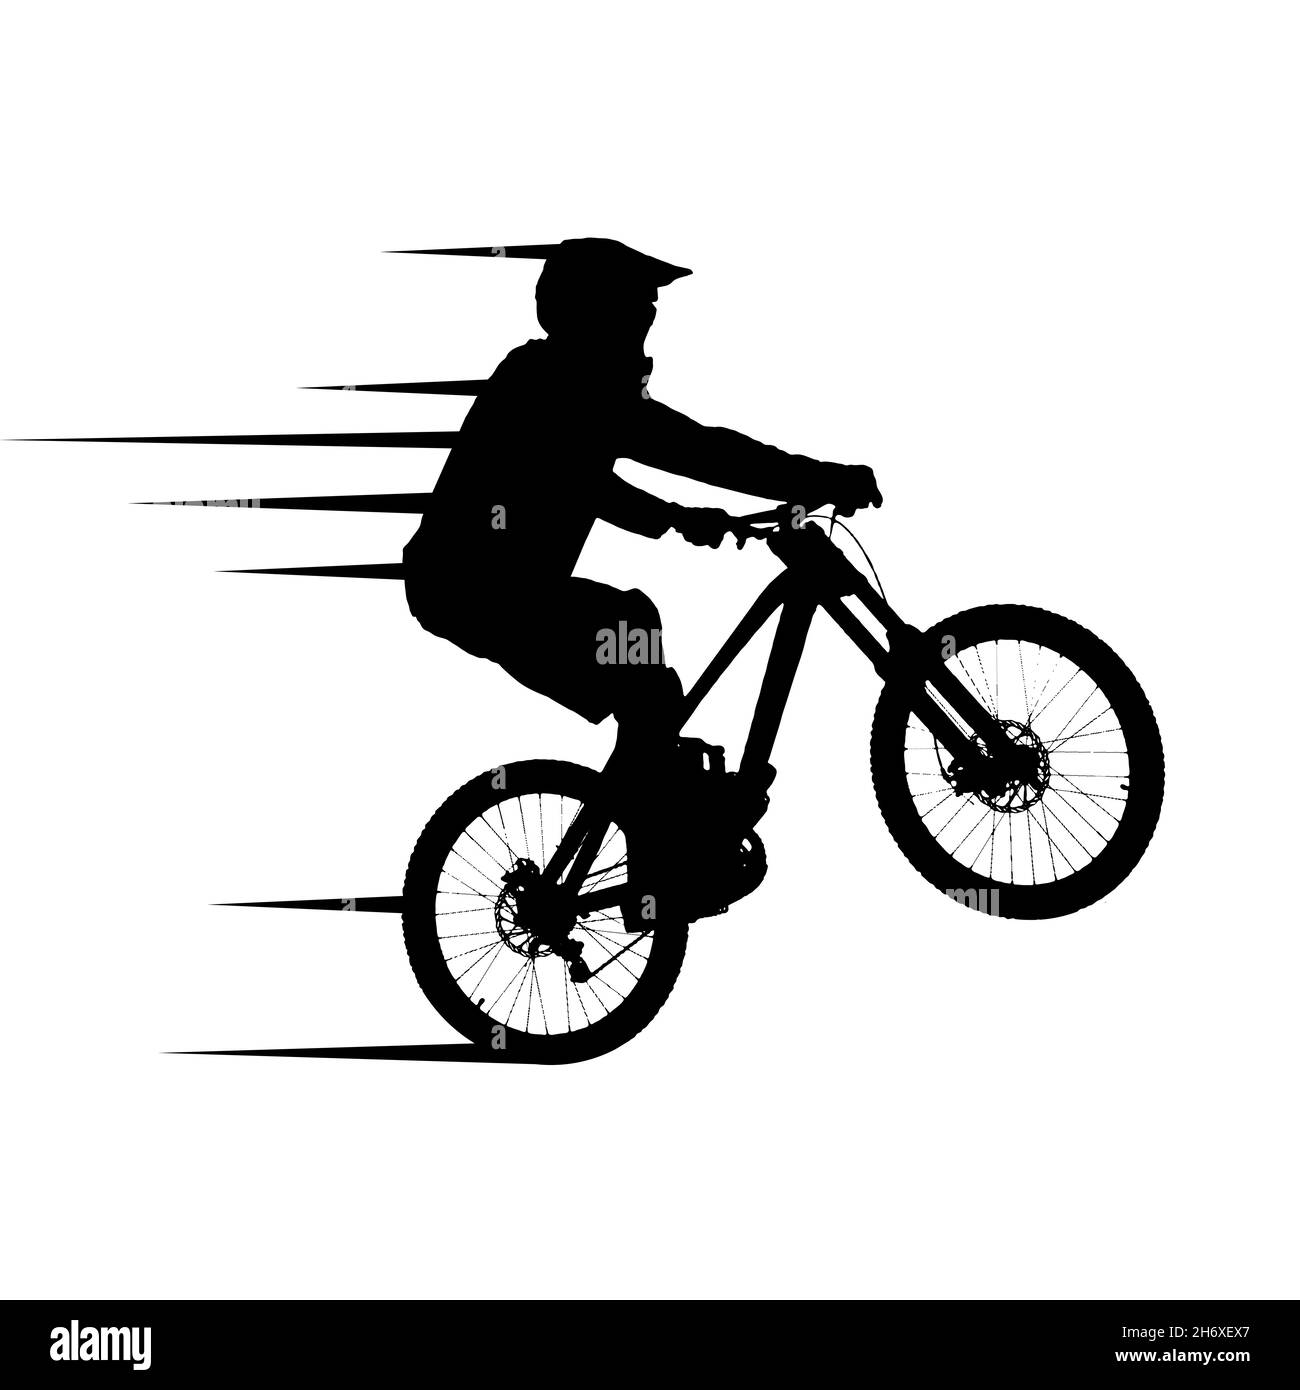 Bike logo Black and White Stock Photos & Images - Alamy